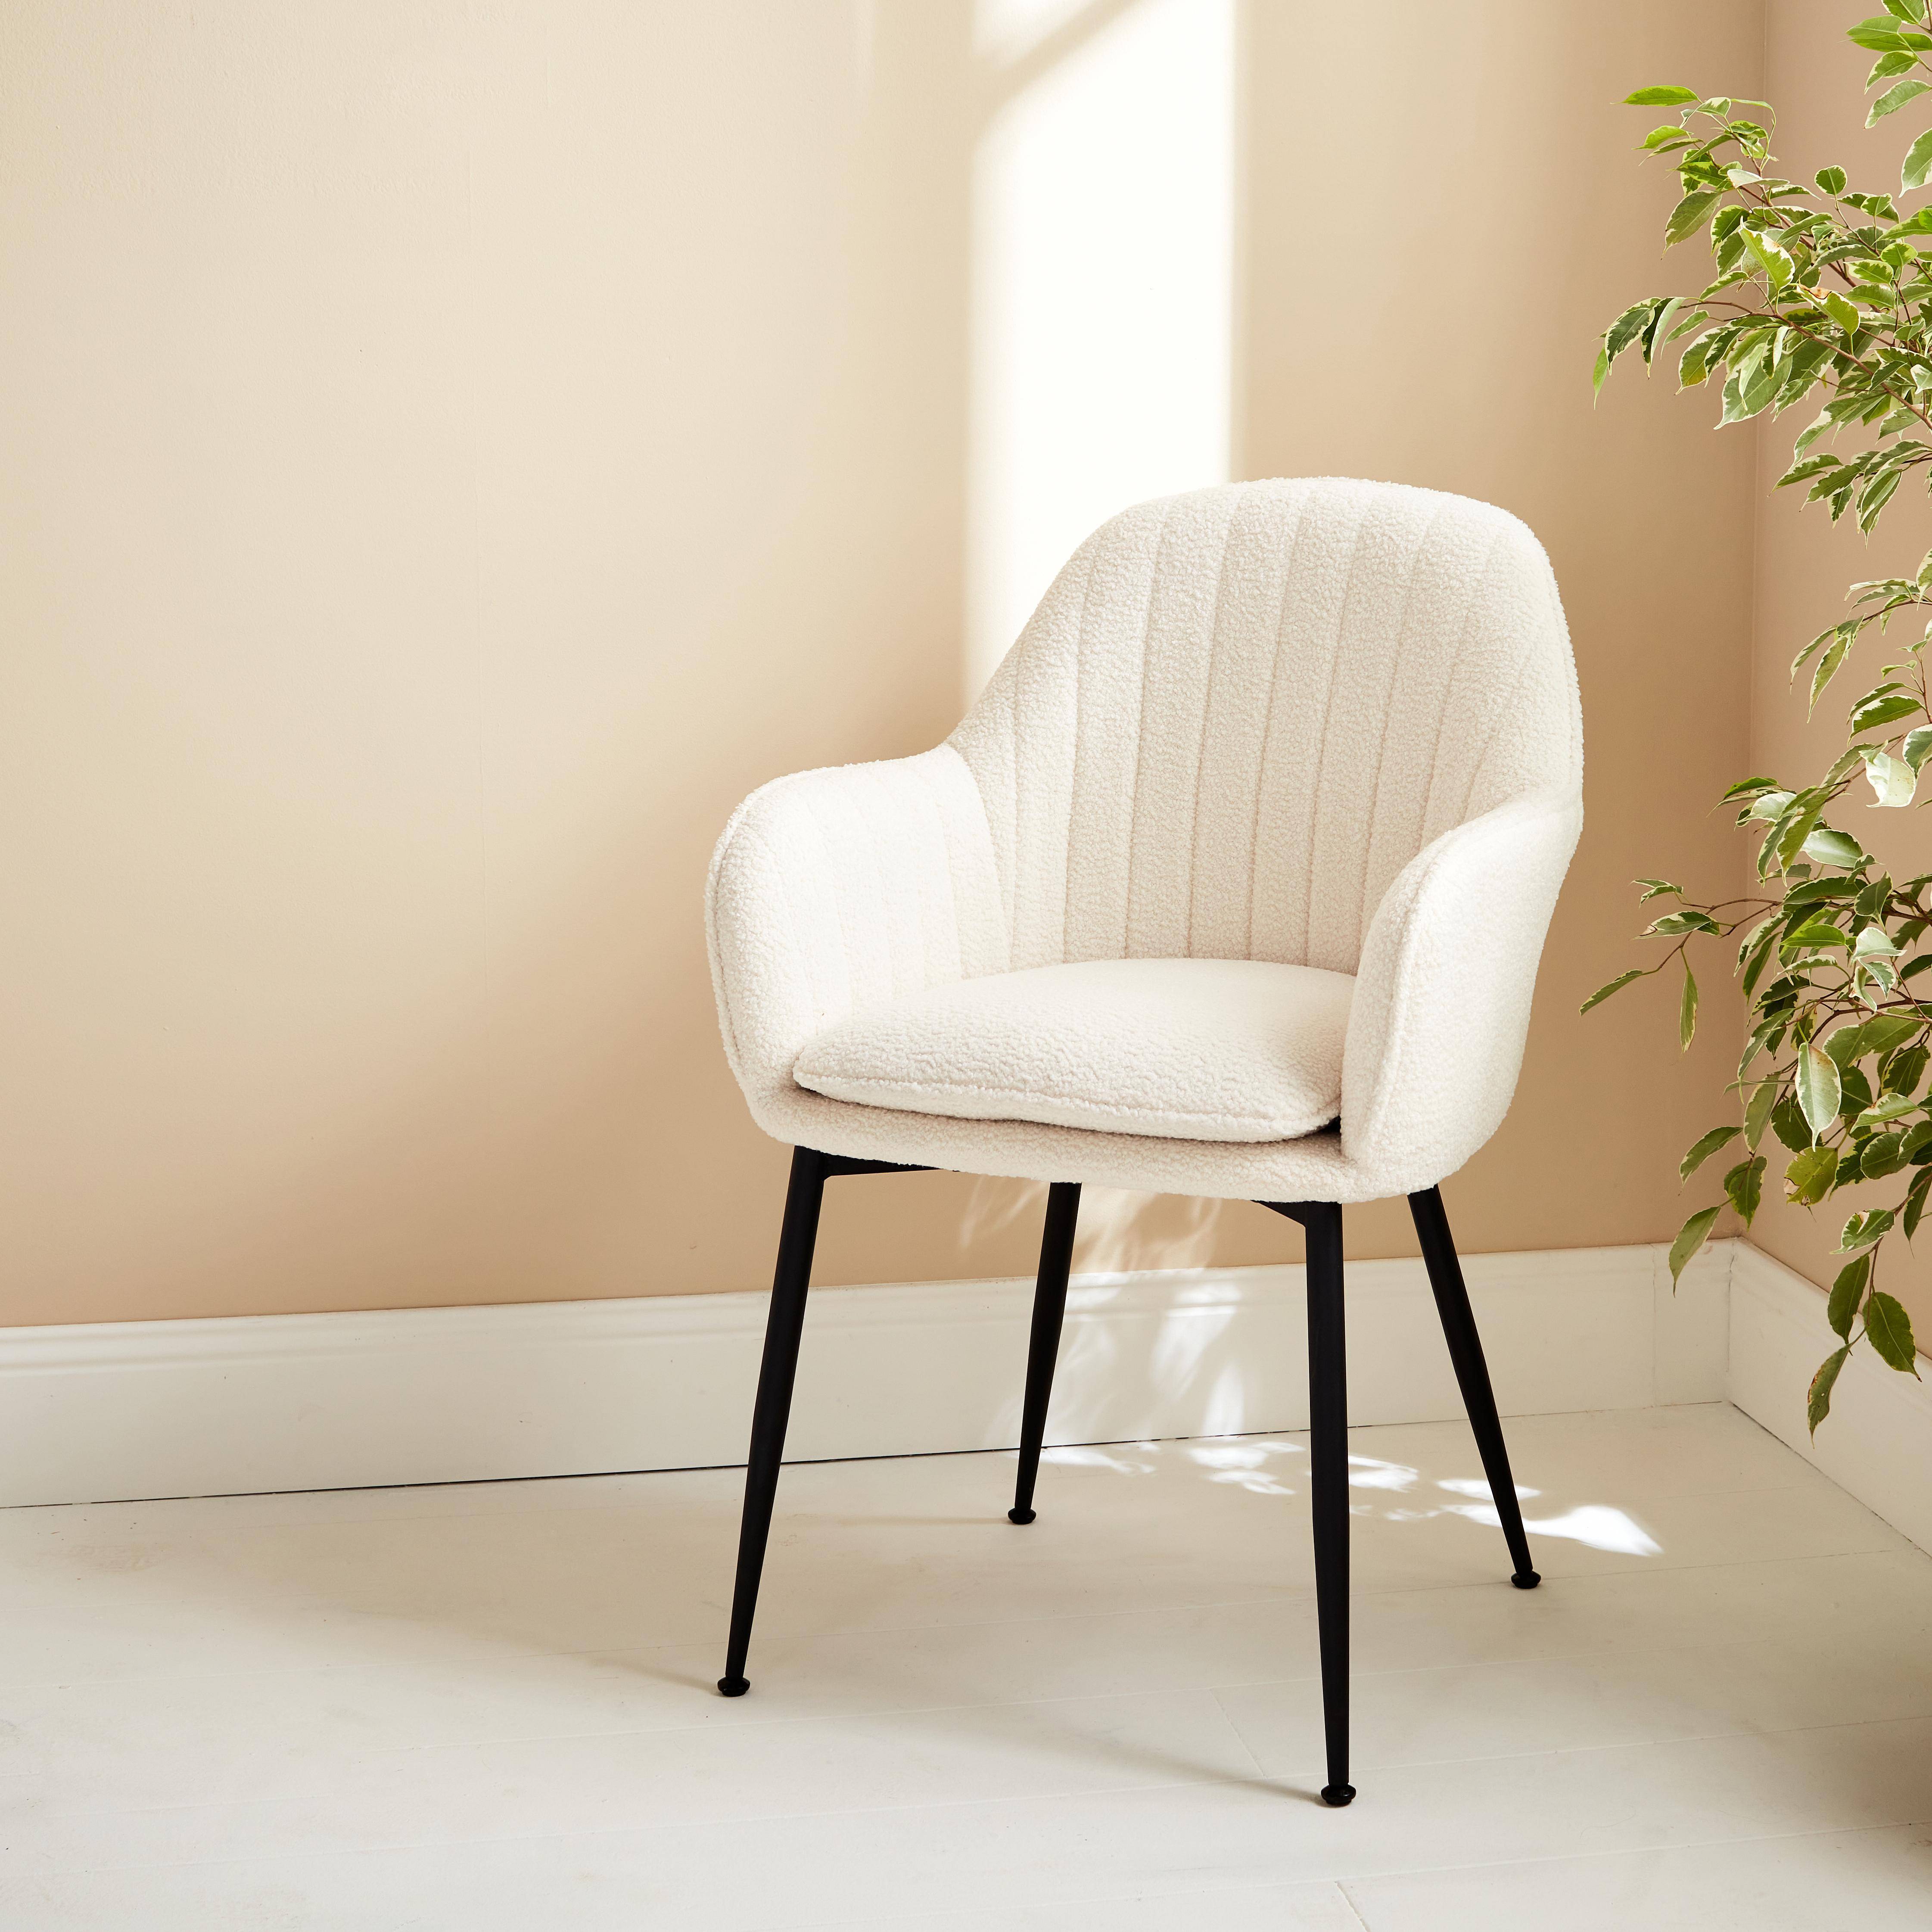 Boucle armchair with metal legs, 58x58x85cm - Shella Boucle - White,sweeek,Photo1